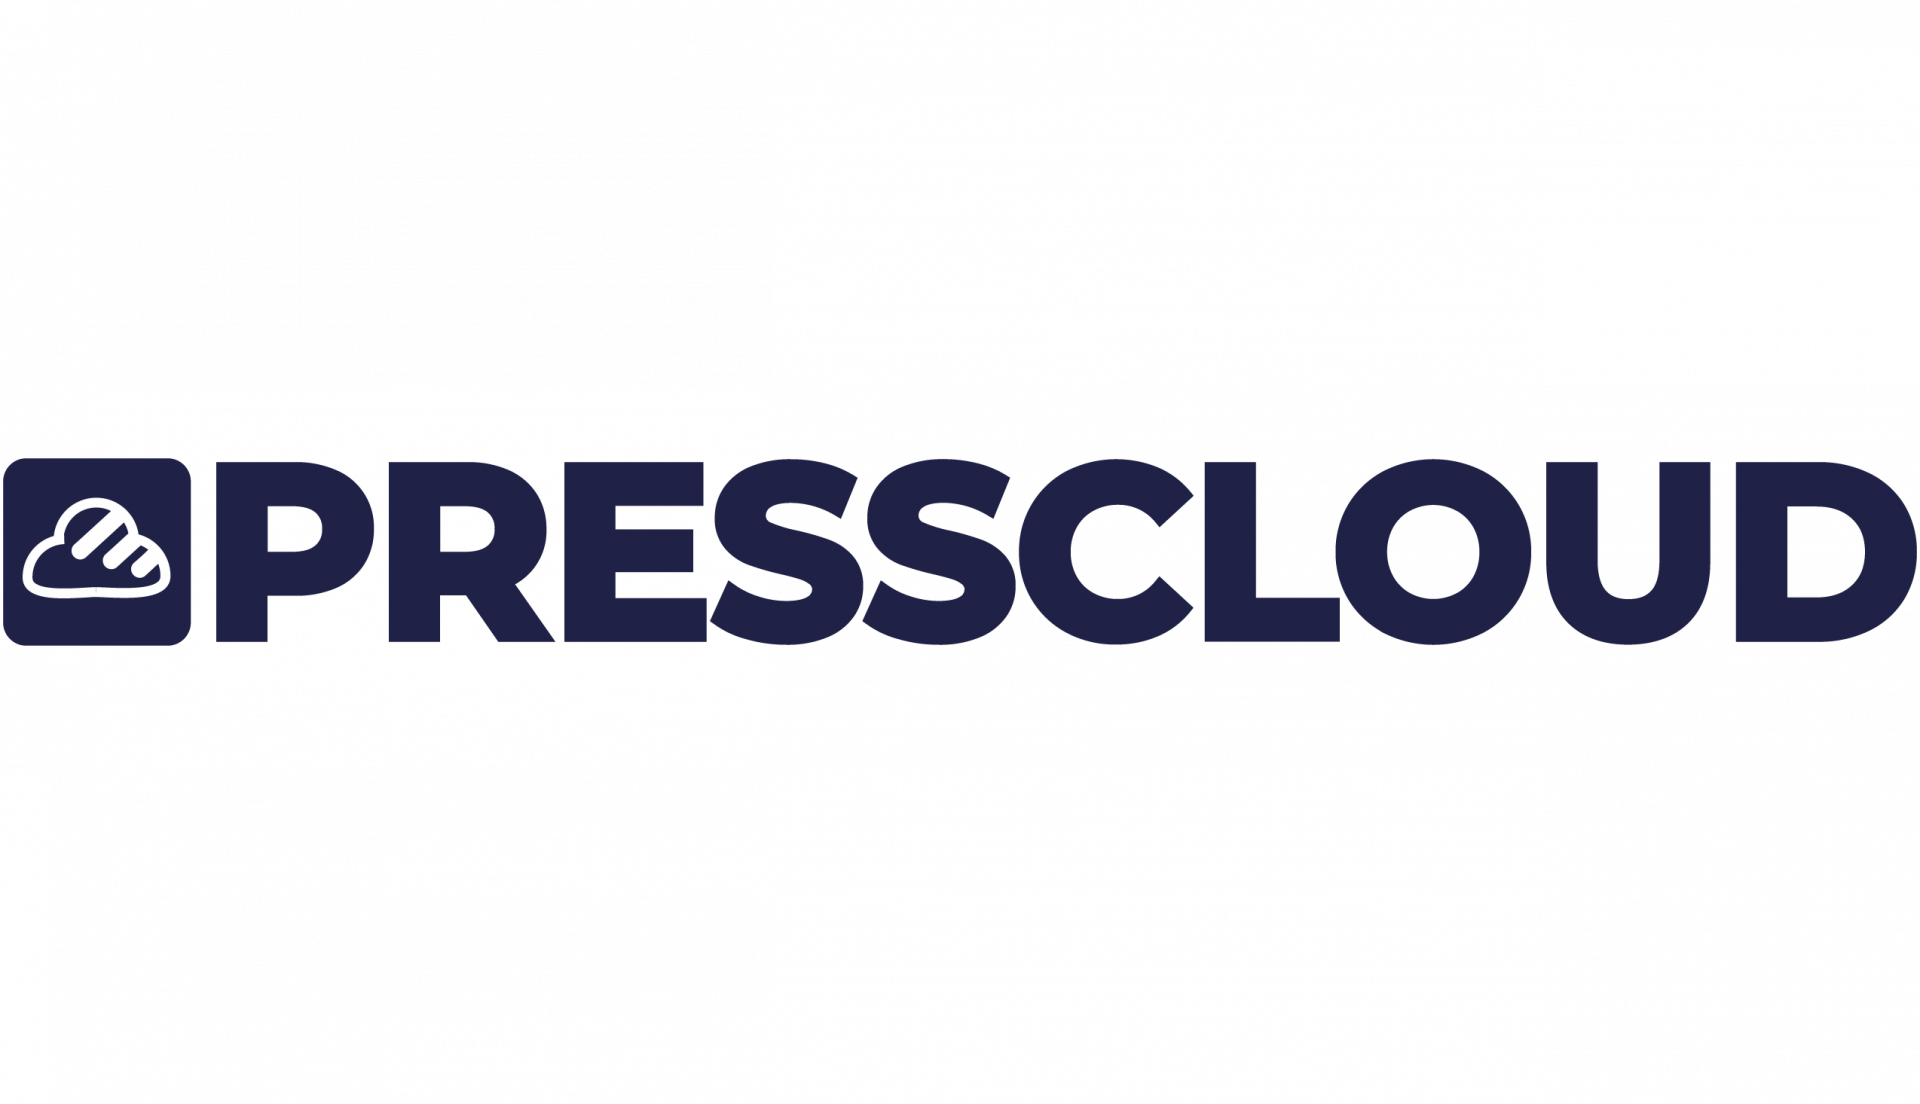 Reimagining Public Relations: PressCloud Fuels Business Growth with Cutting-Edge AI-Driven PR Platform